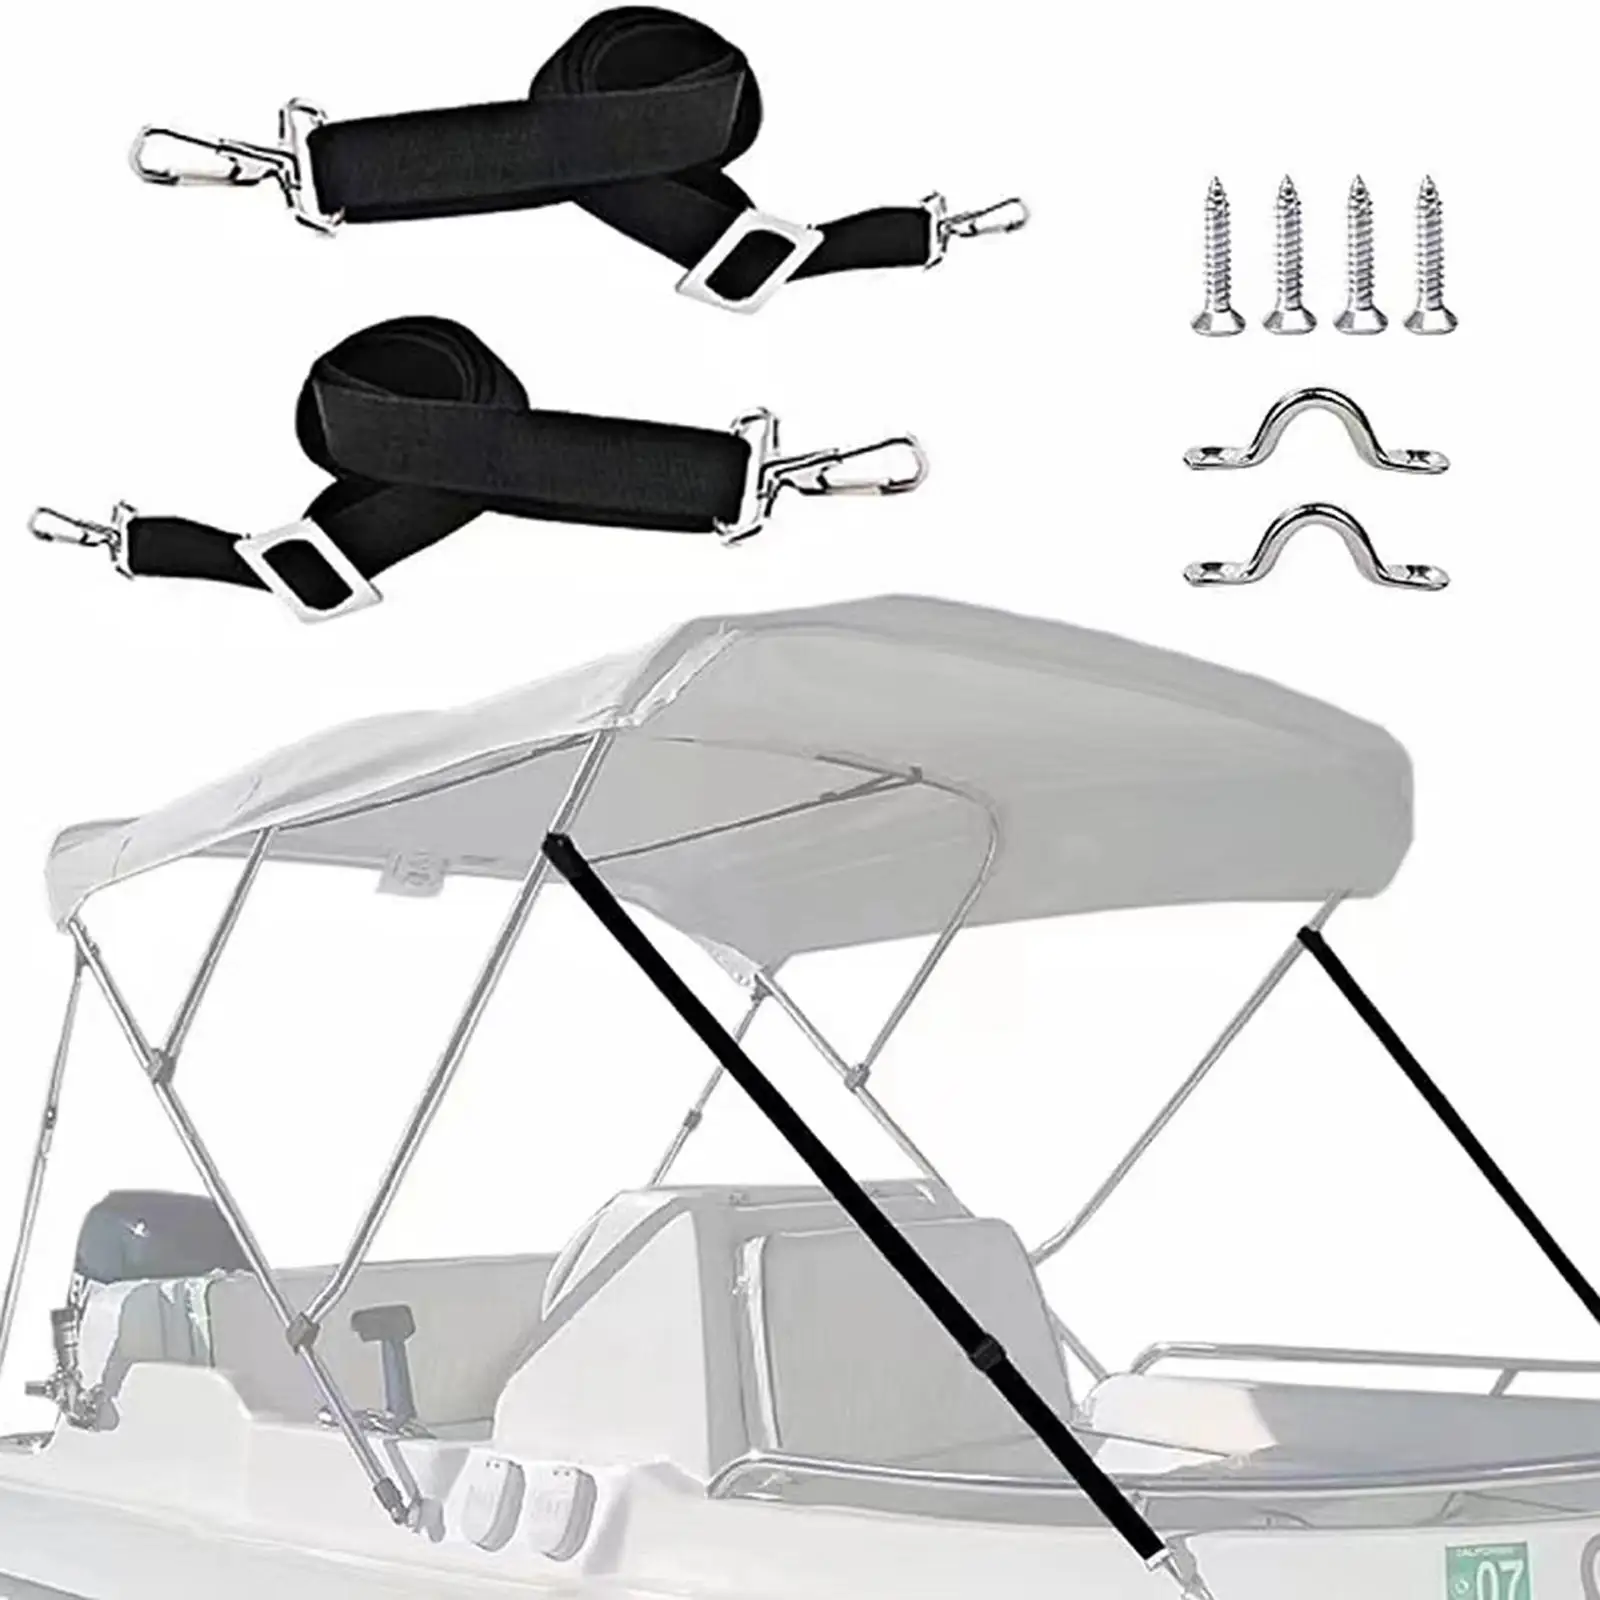 2Pcs Adjustable Bimini Top Straps Boat Strap Pad Eye Straps W/ Loops and Hook